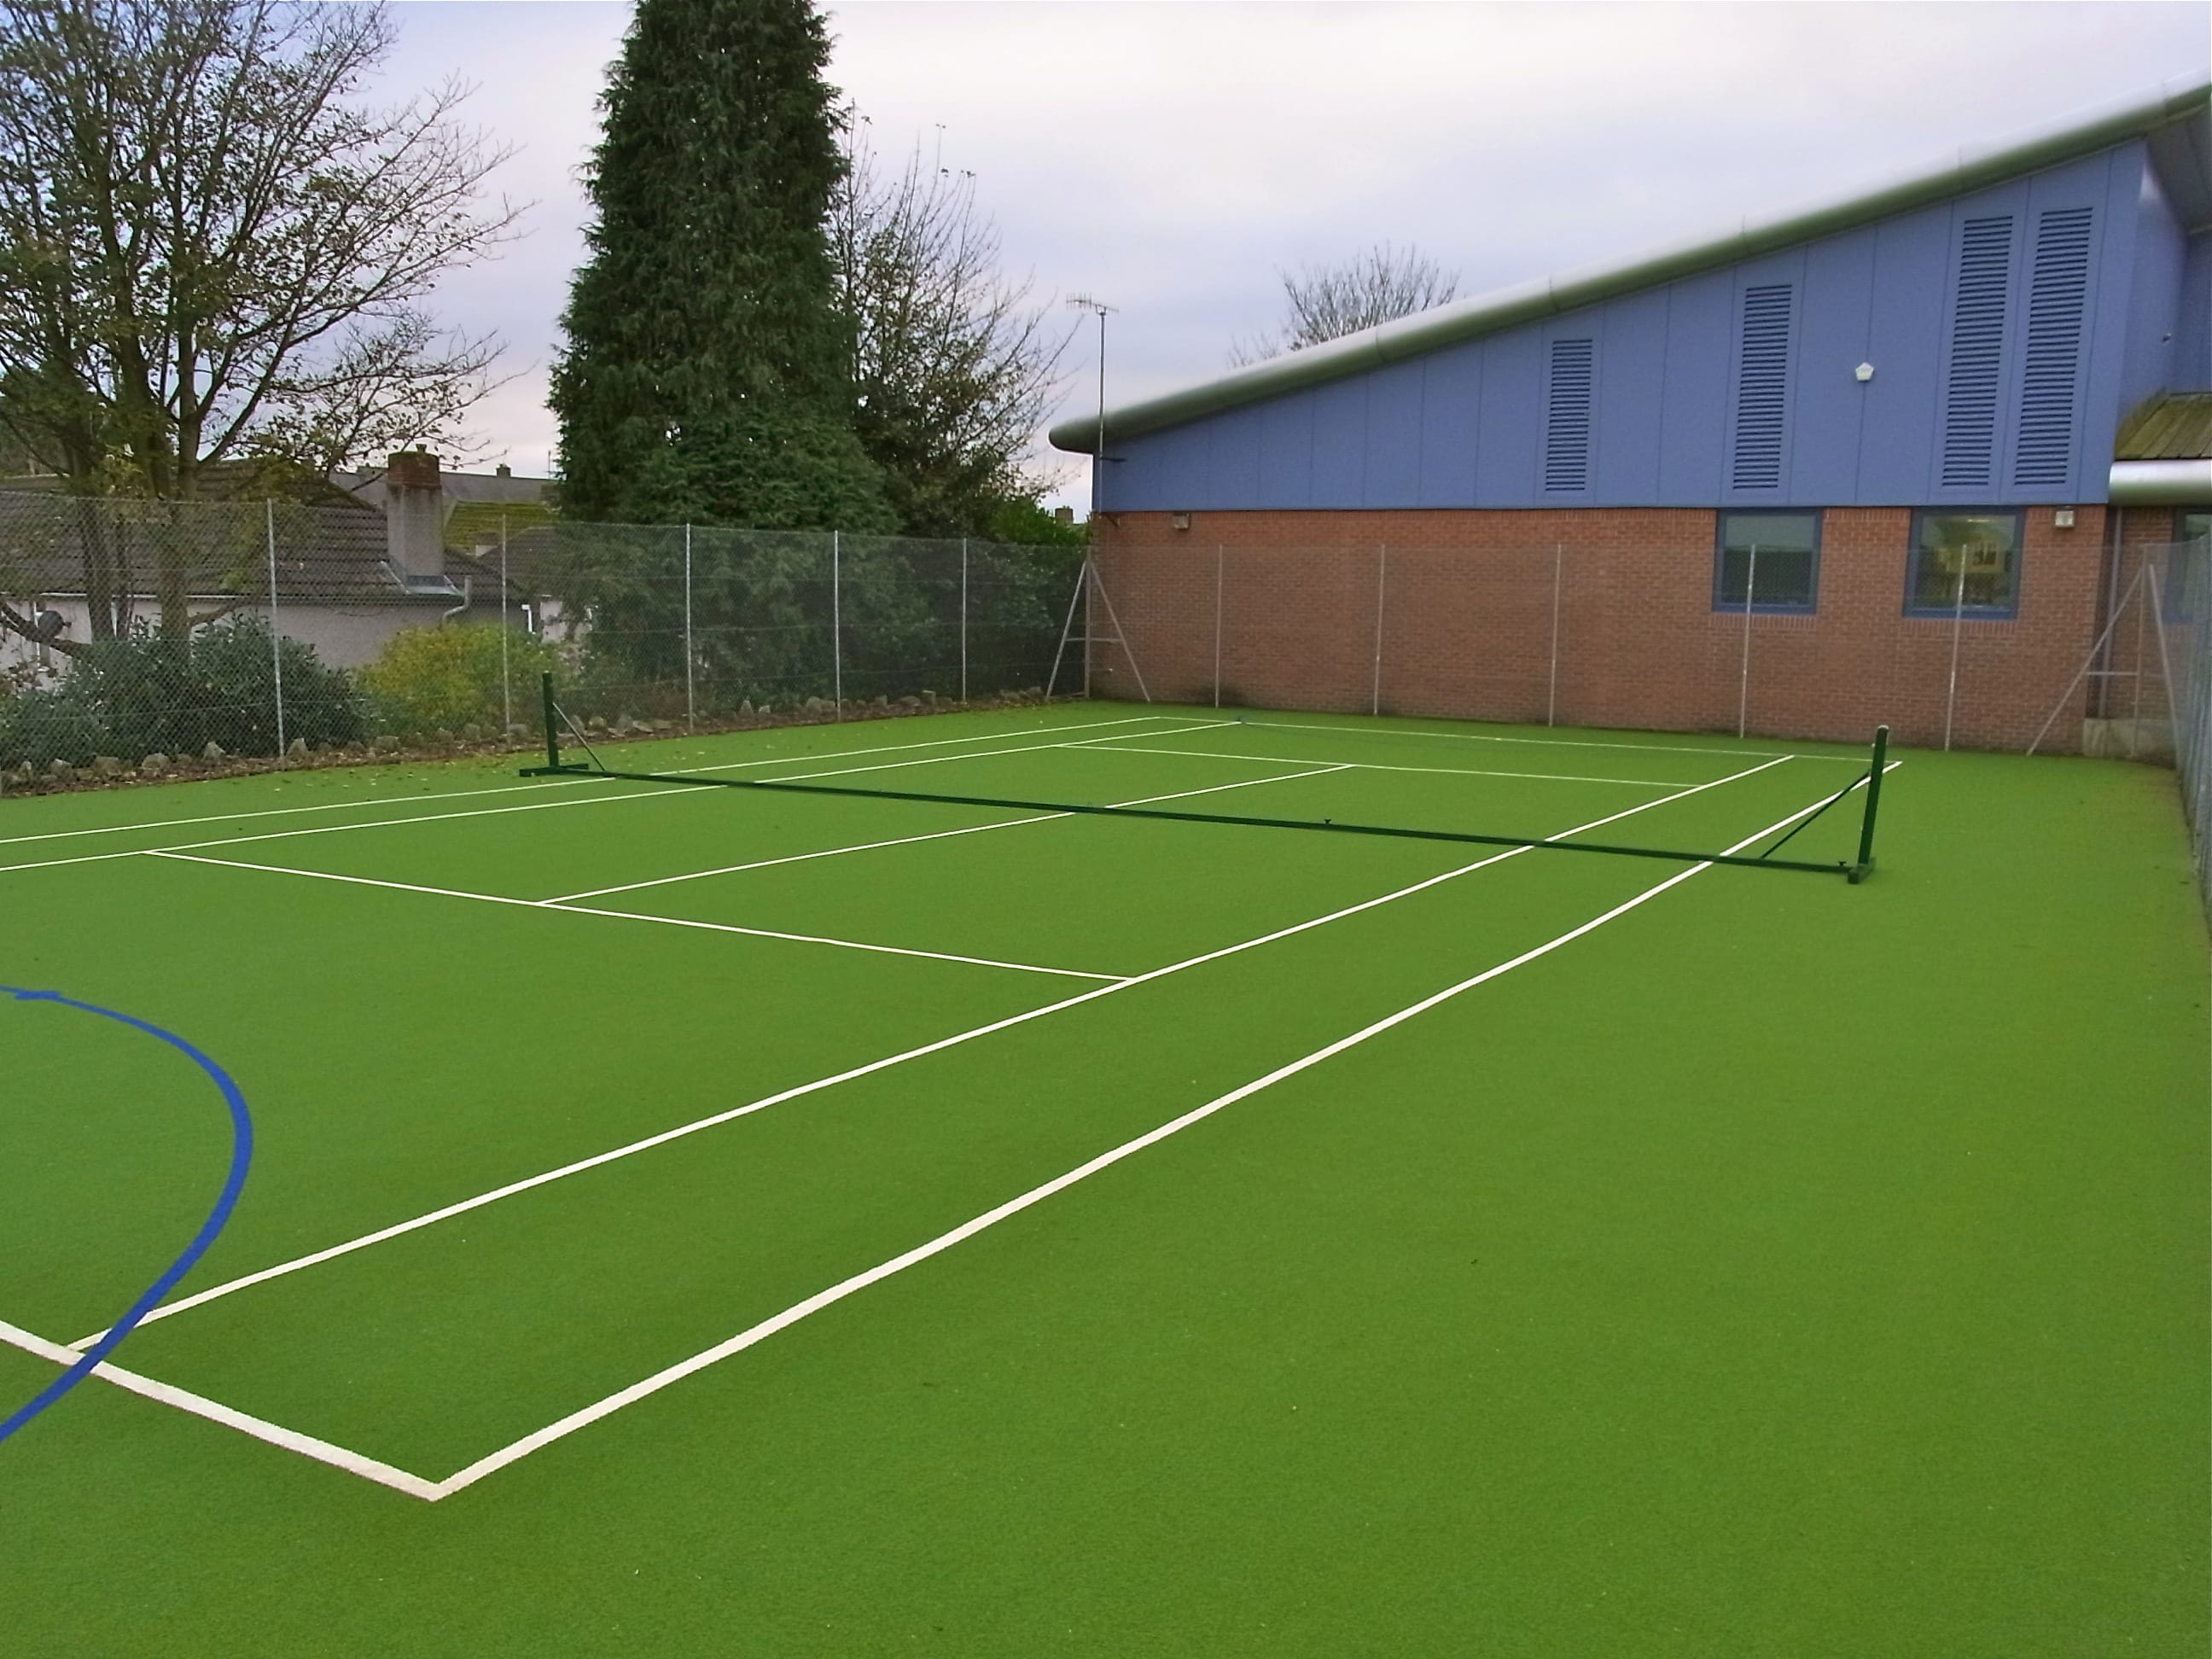 muga used as a tennis court